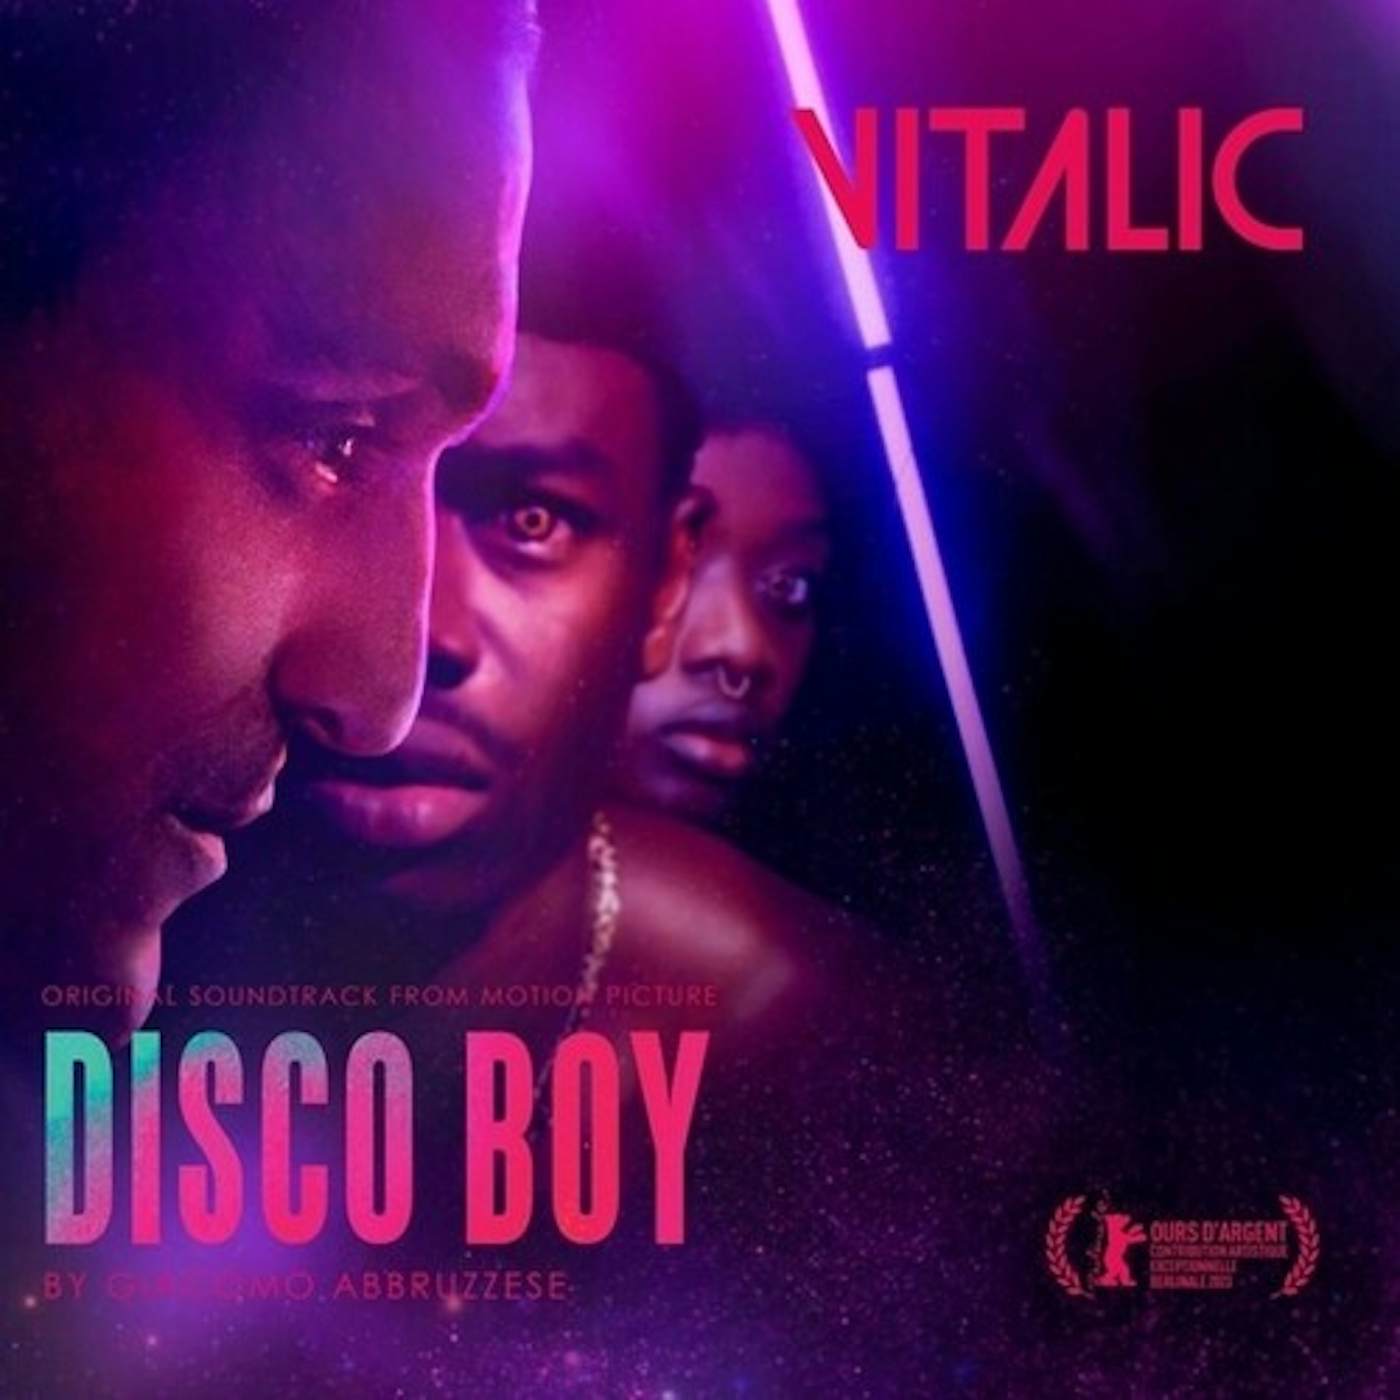 Vitalic DISCO BOY - Original Soundtrack Vinyl Record